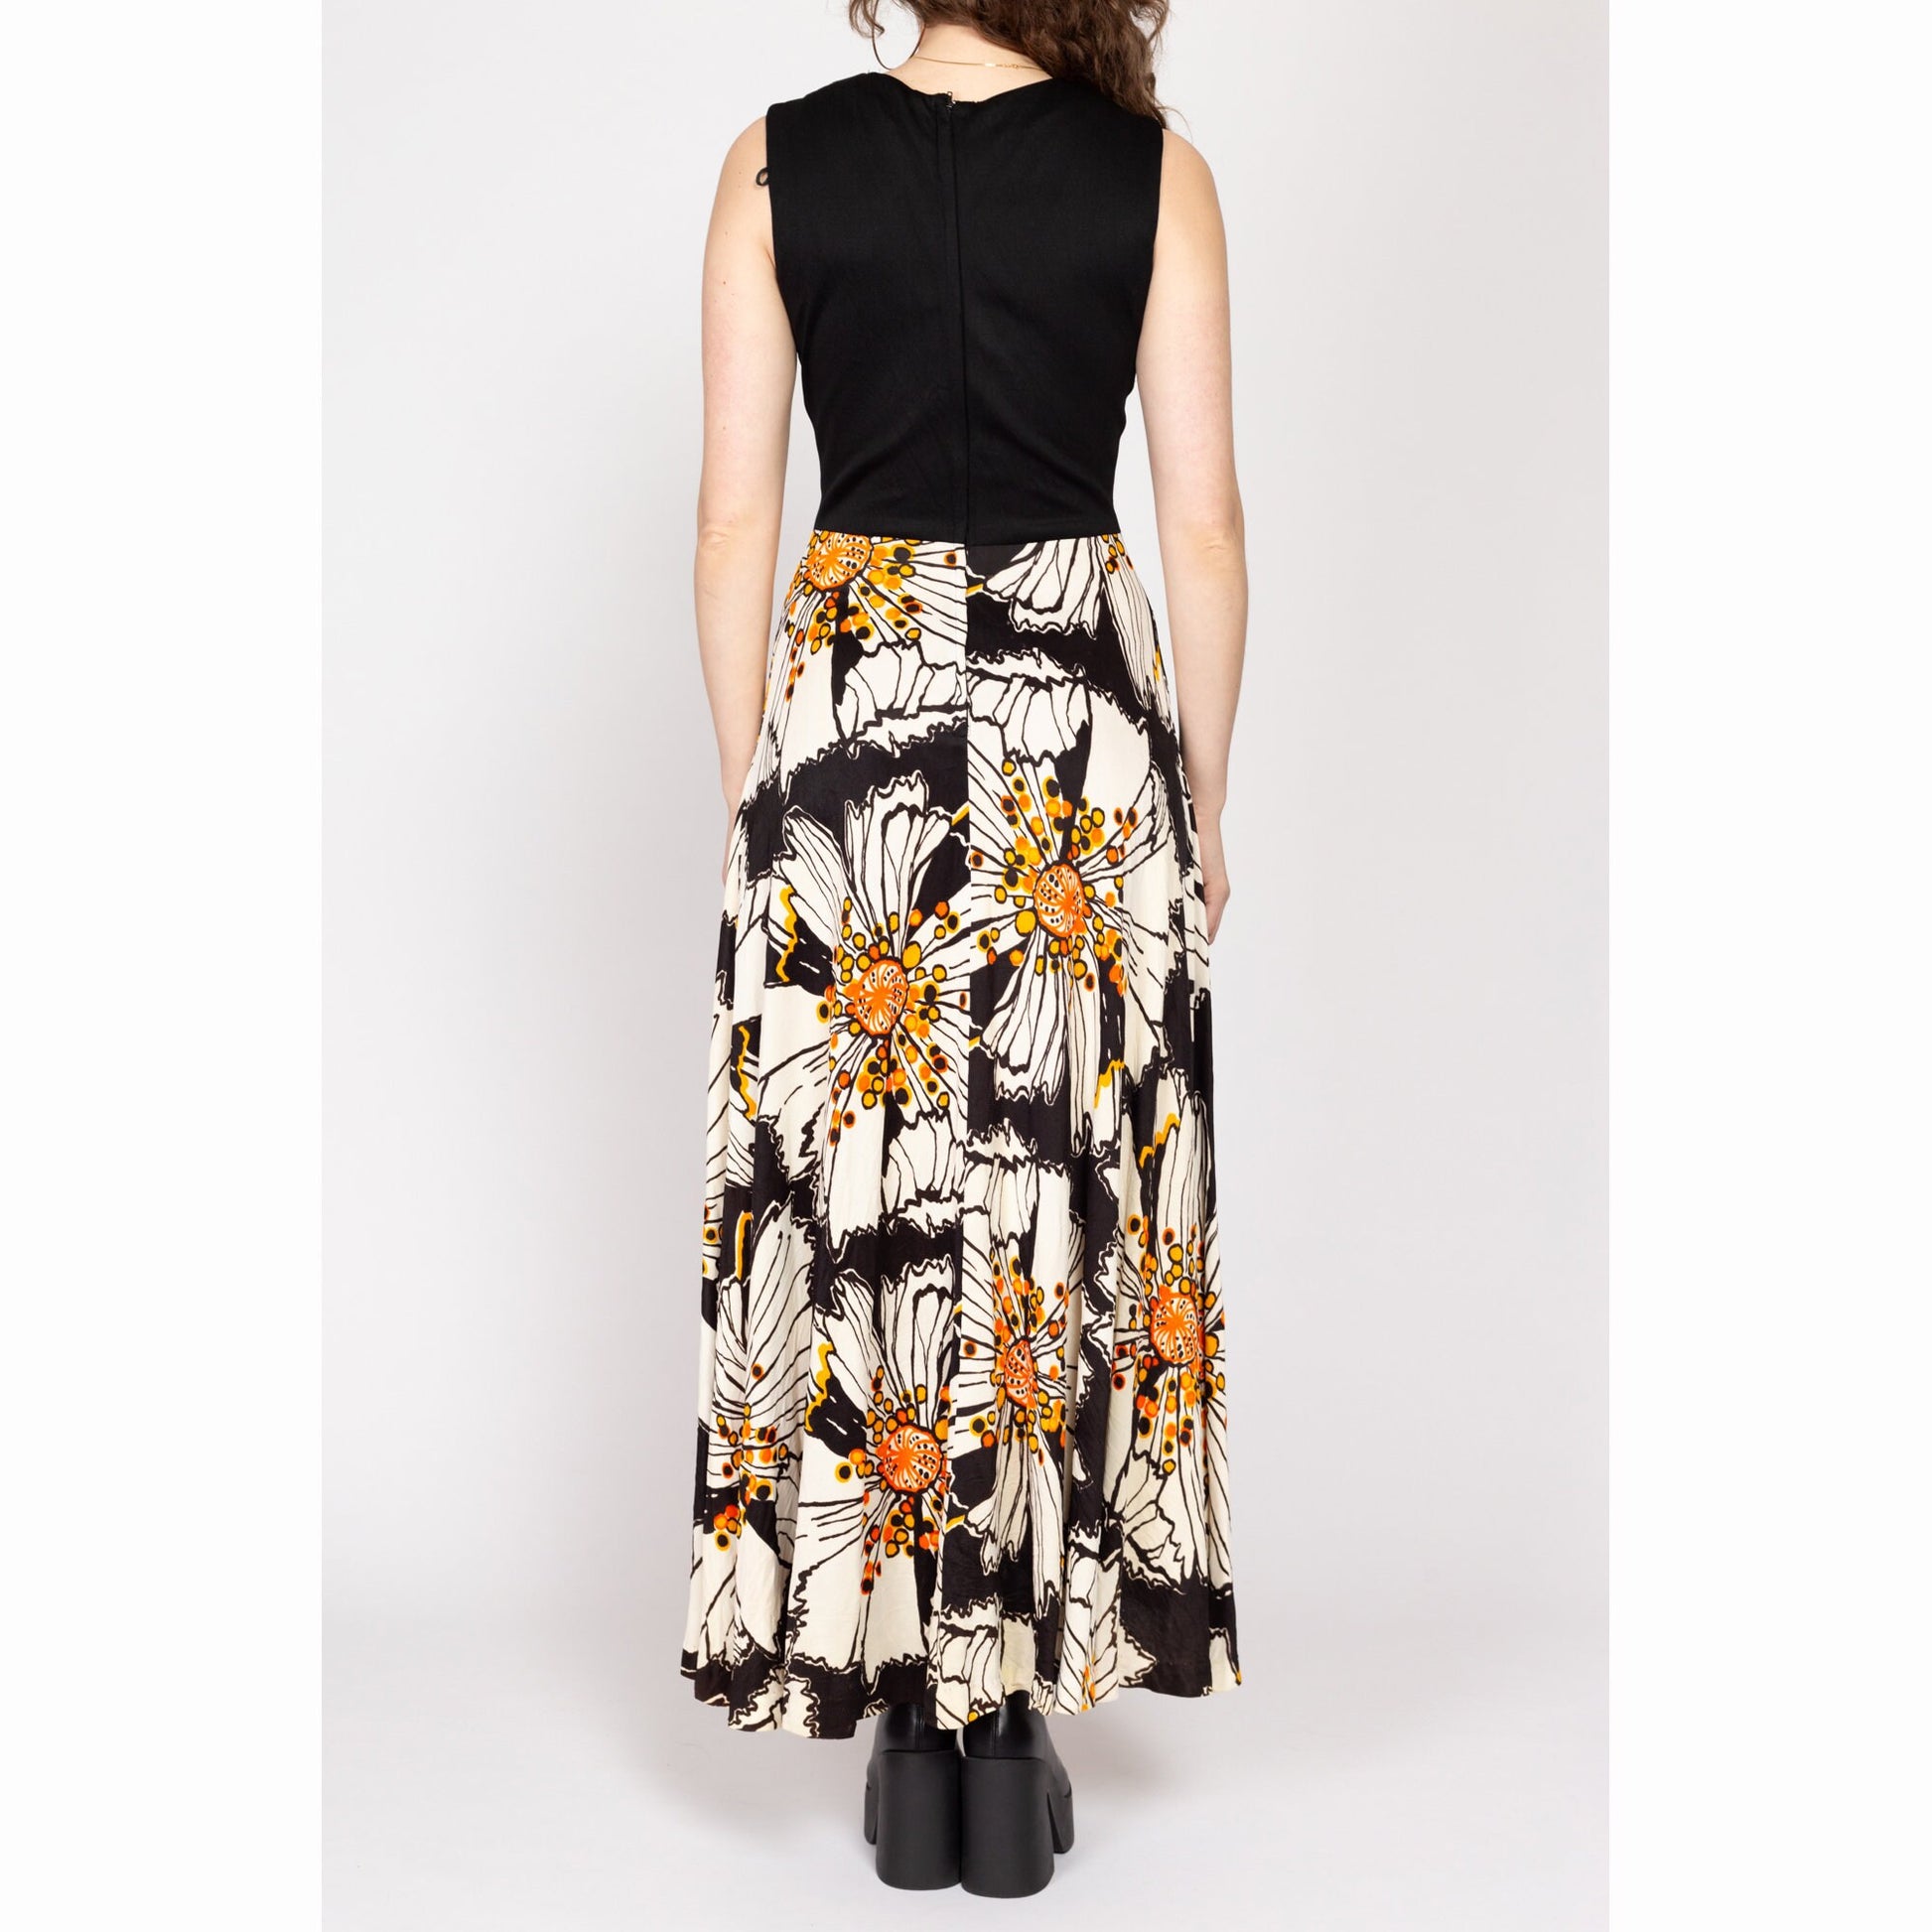 Medium 70s Black & White Poppy Print Maxi Dress, As Is | Vintage Sleeveless Boho Floral Hostess Dress